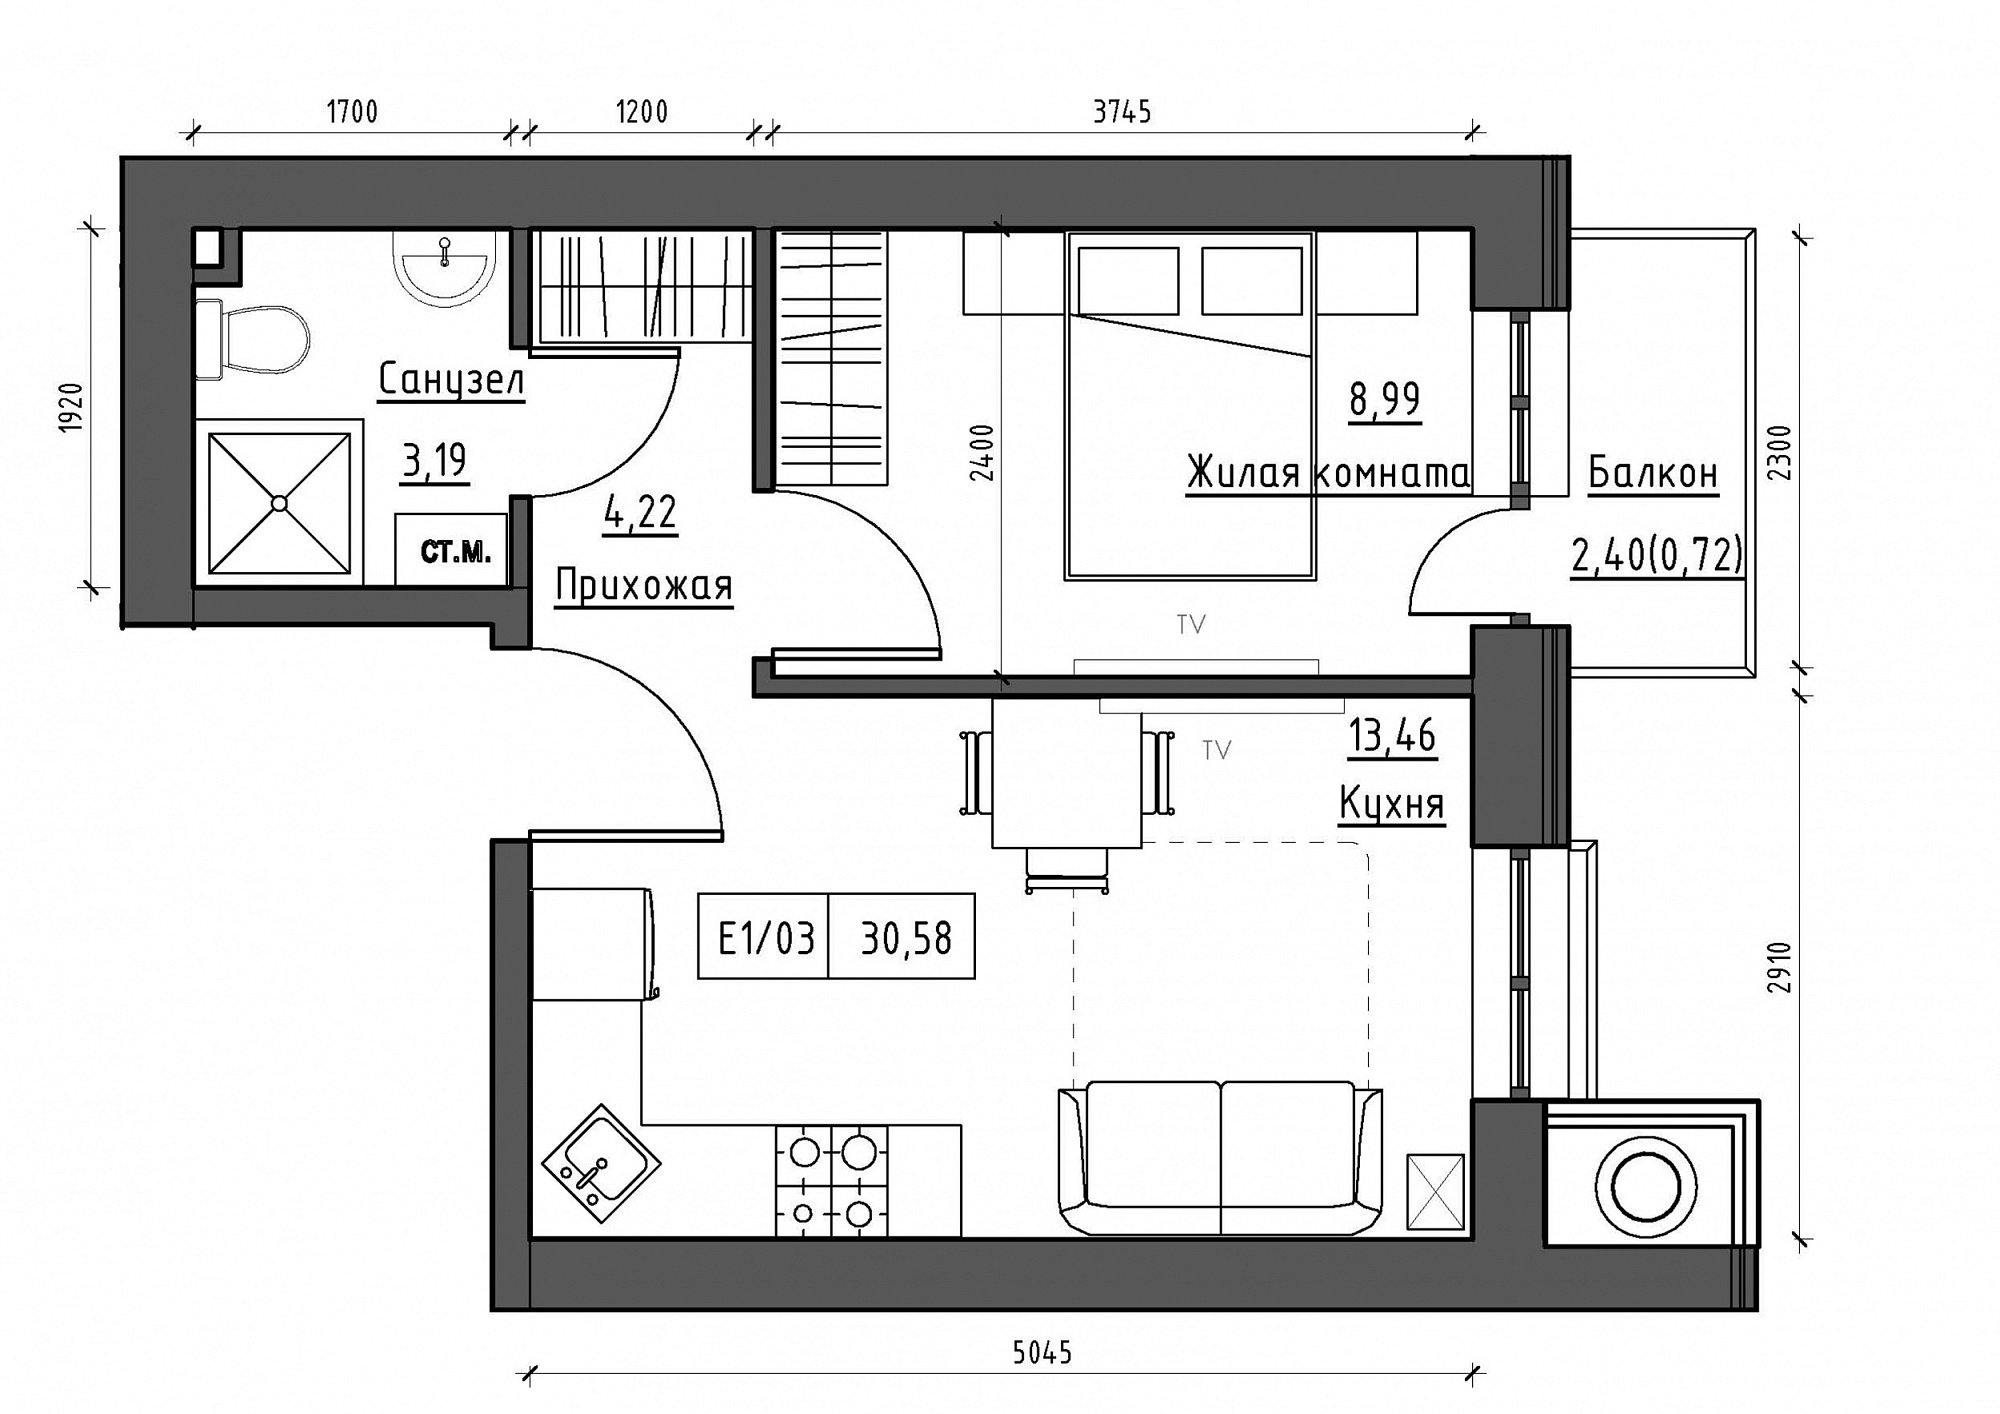 Planning 1-rm flats area 30.58m2, KS-012-03/0013.